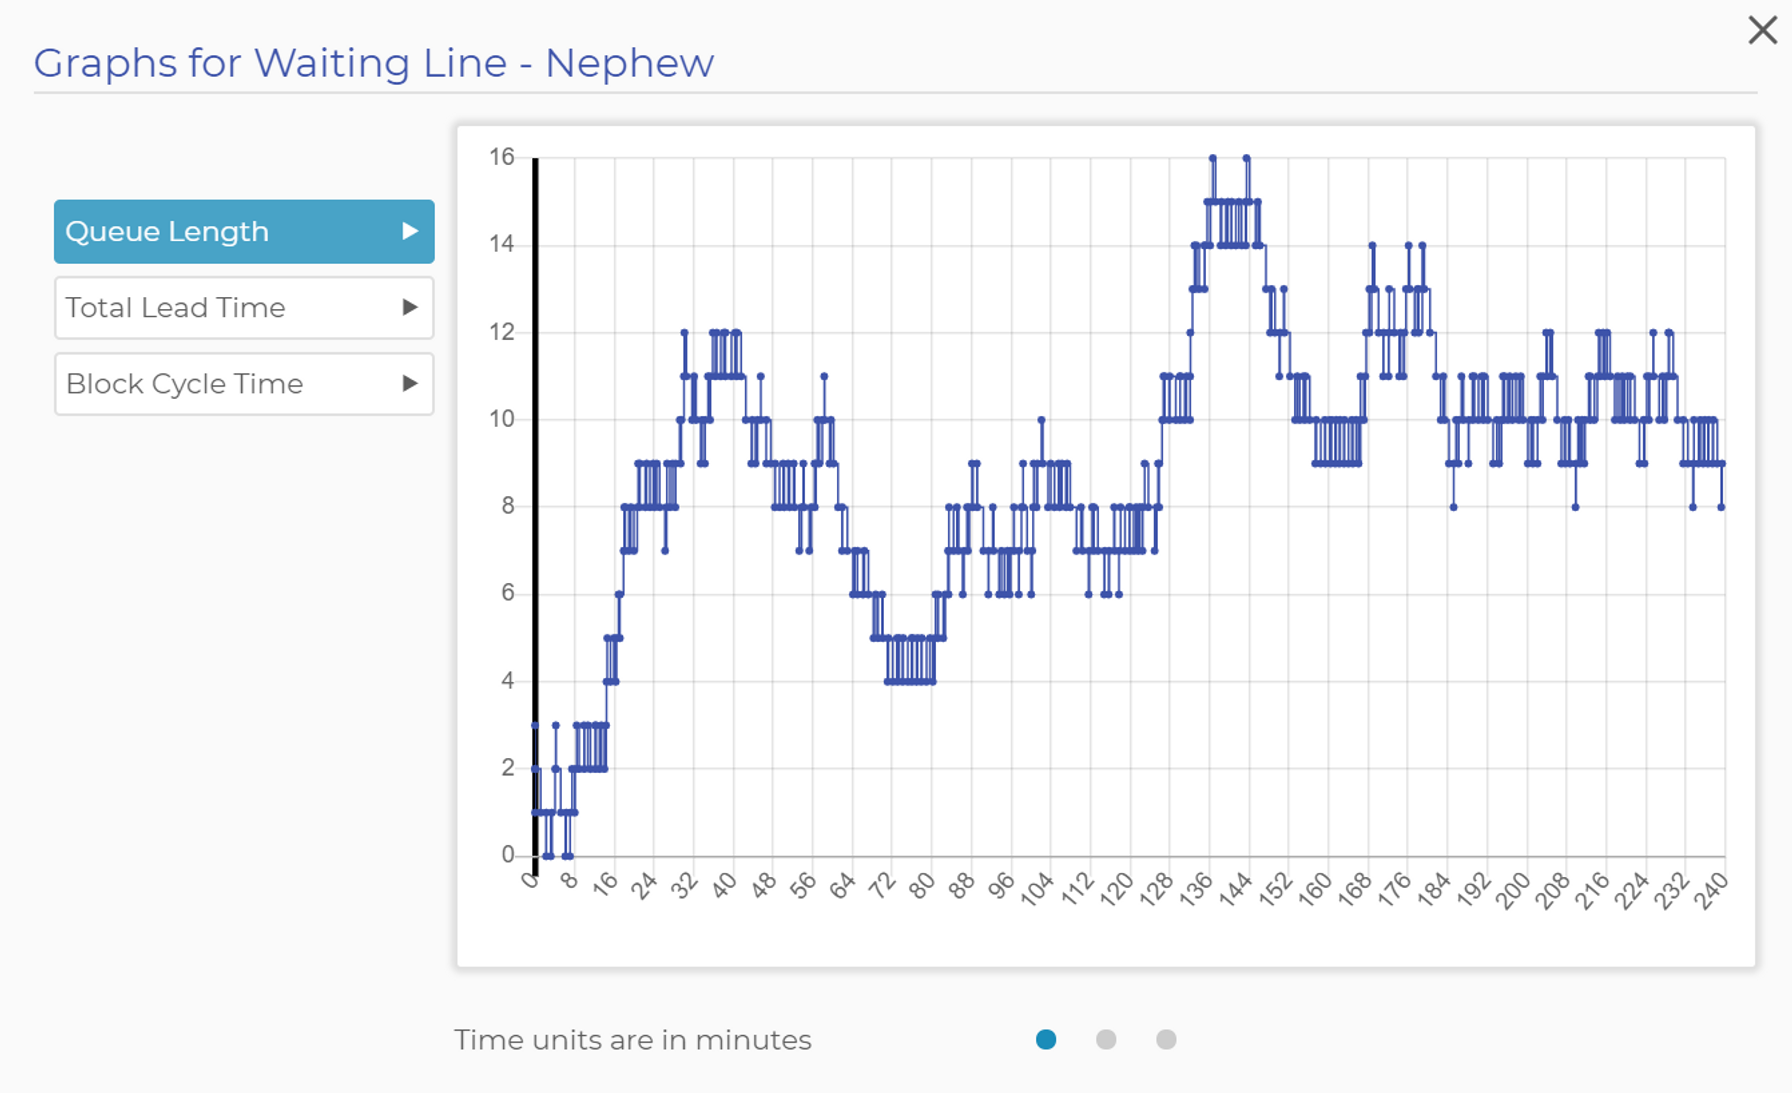 Nephew's Waiting Line Graph